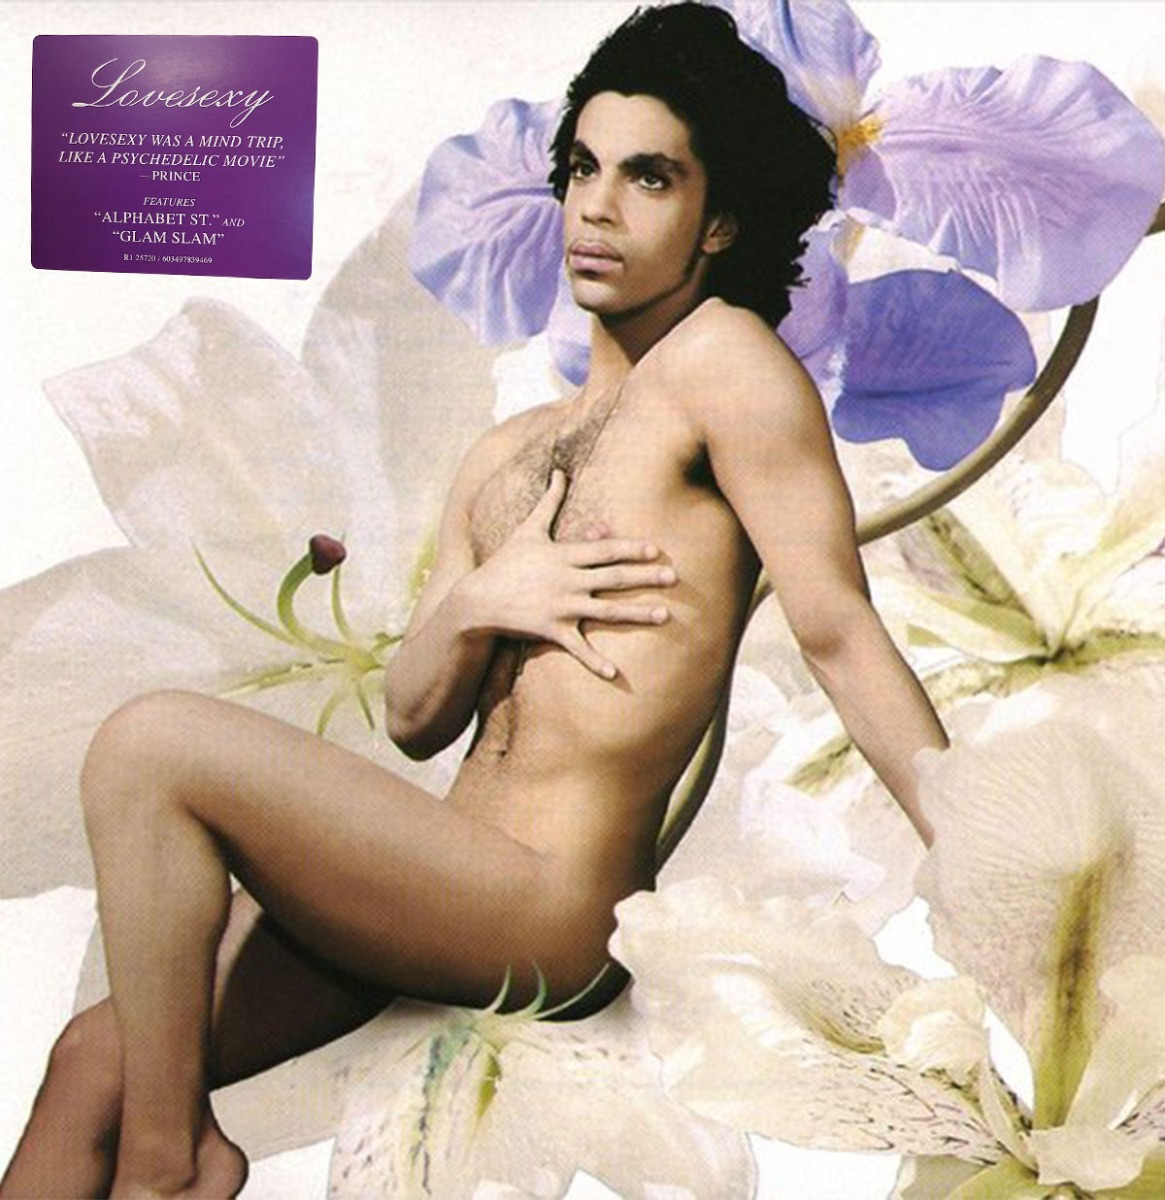 Prince - Lovesexy LP